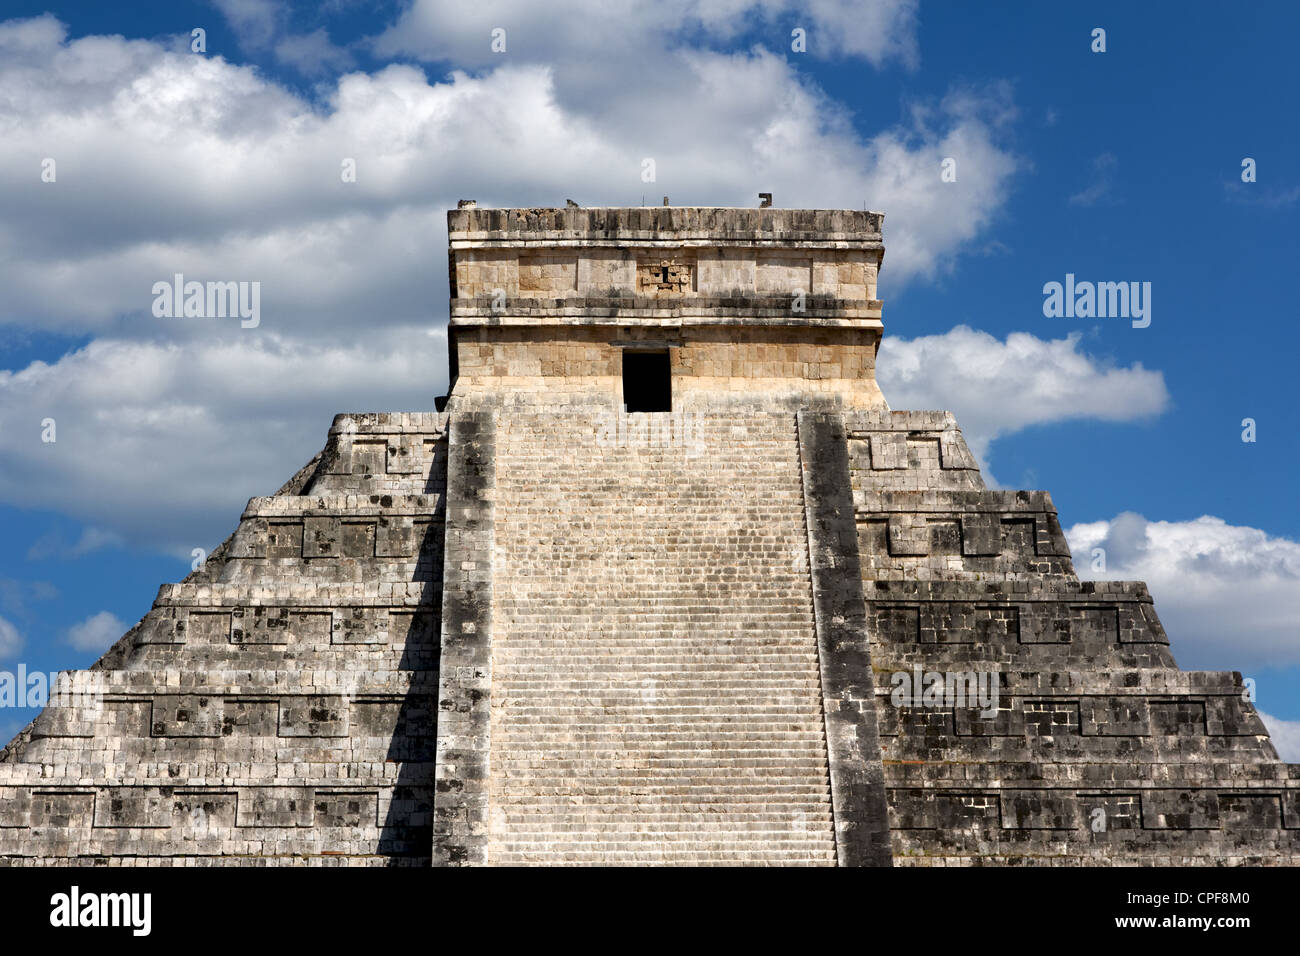 Frontal view of the top of Kukulkan pyramid at the Mayan city of Chichen Itza, Yucatan, Mexico. Stock Photo